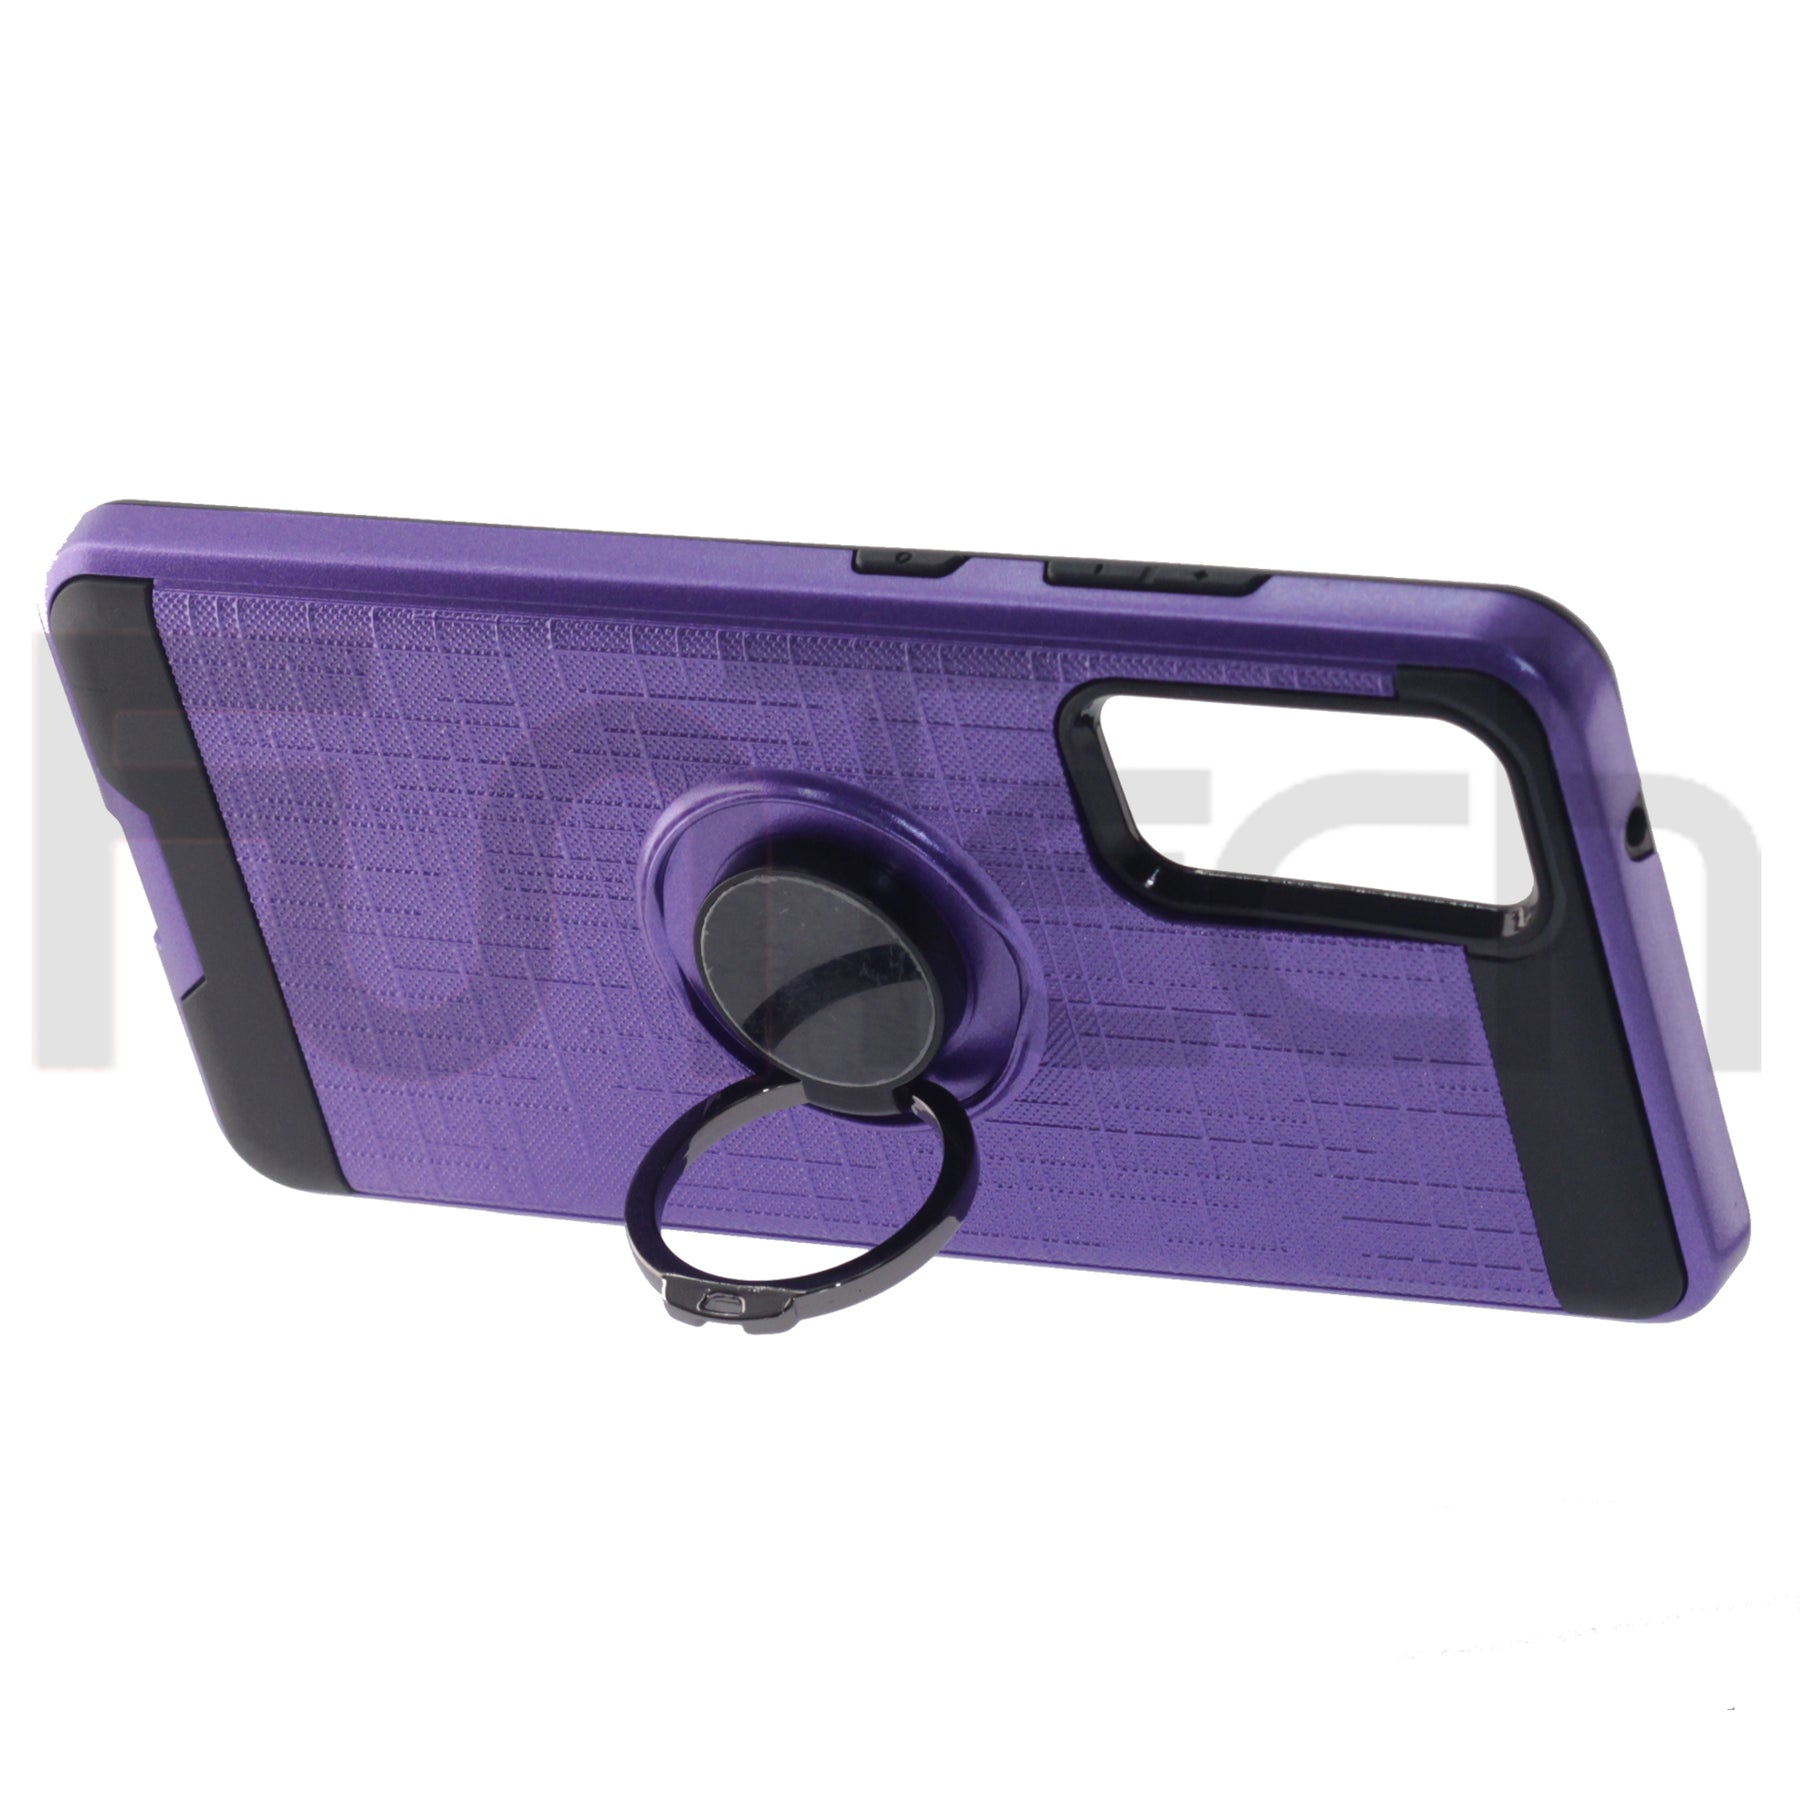 Samsung S20 FE, Ring Armor Case, Color Purple